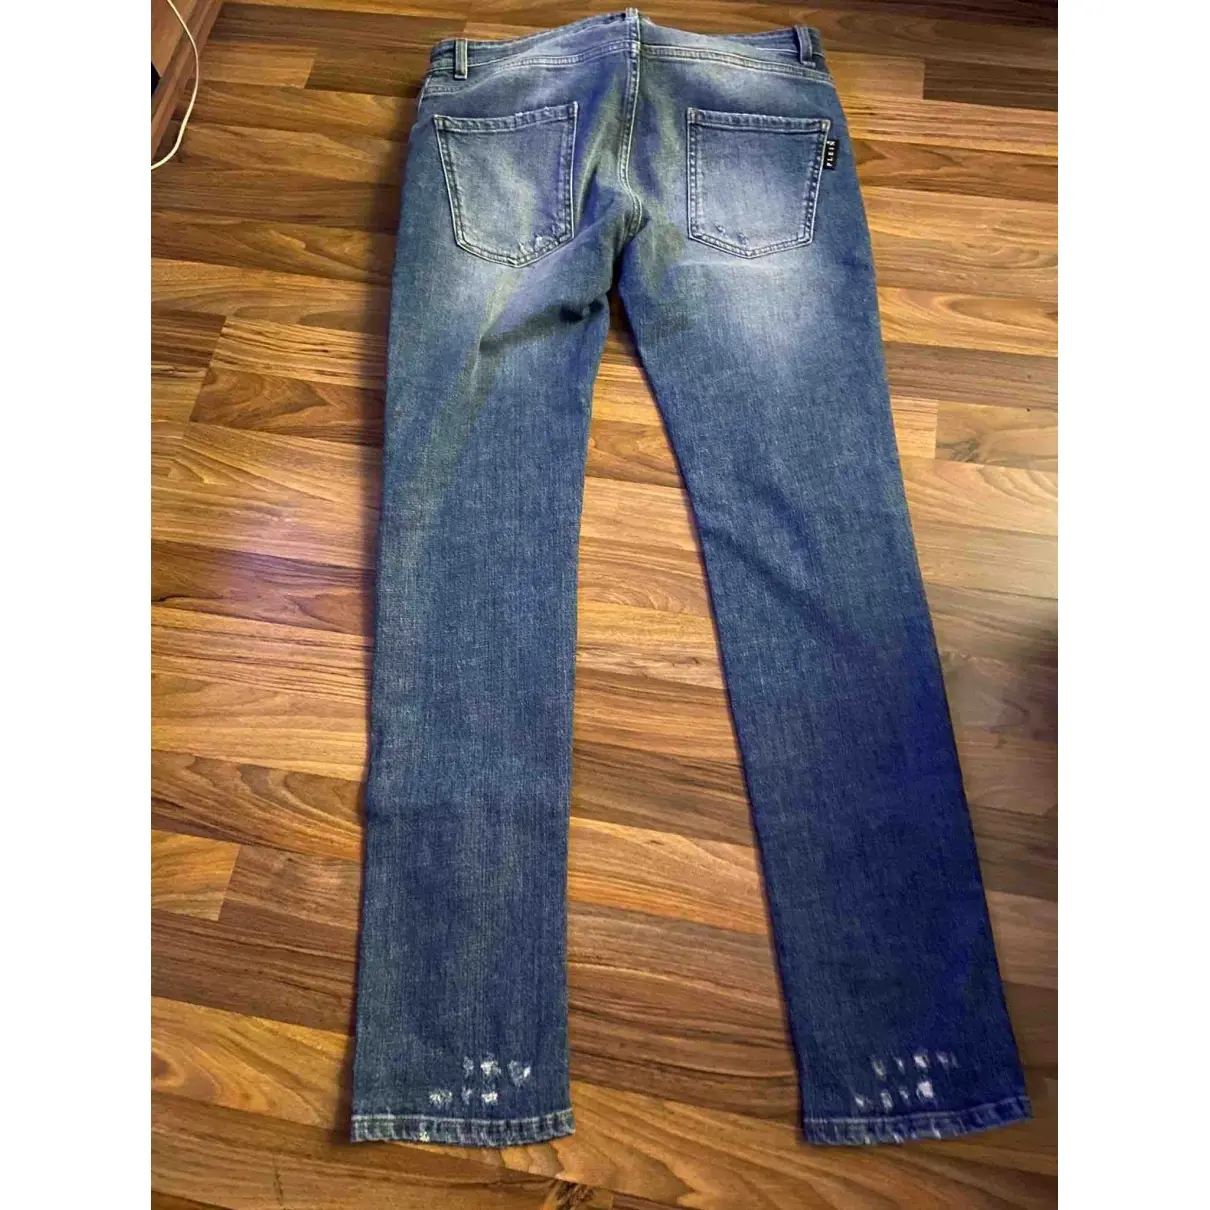 Philipp Plein Straight jeans for sale